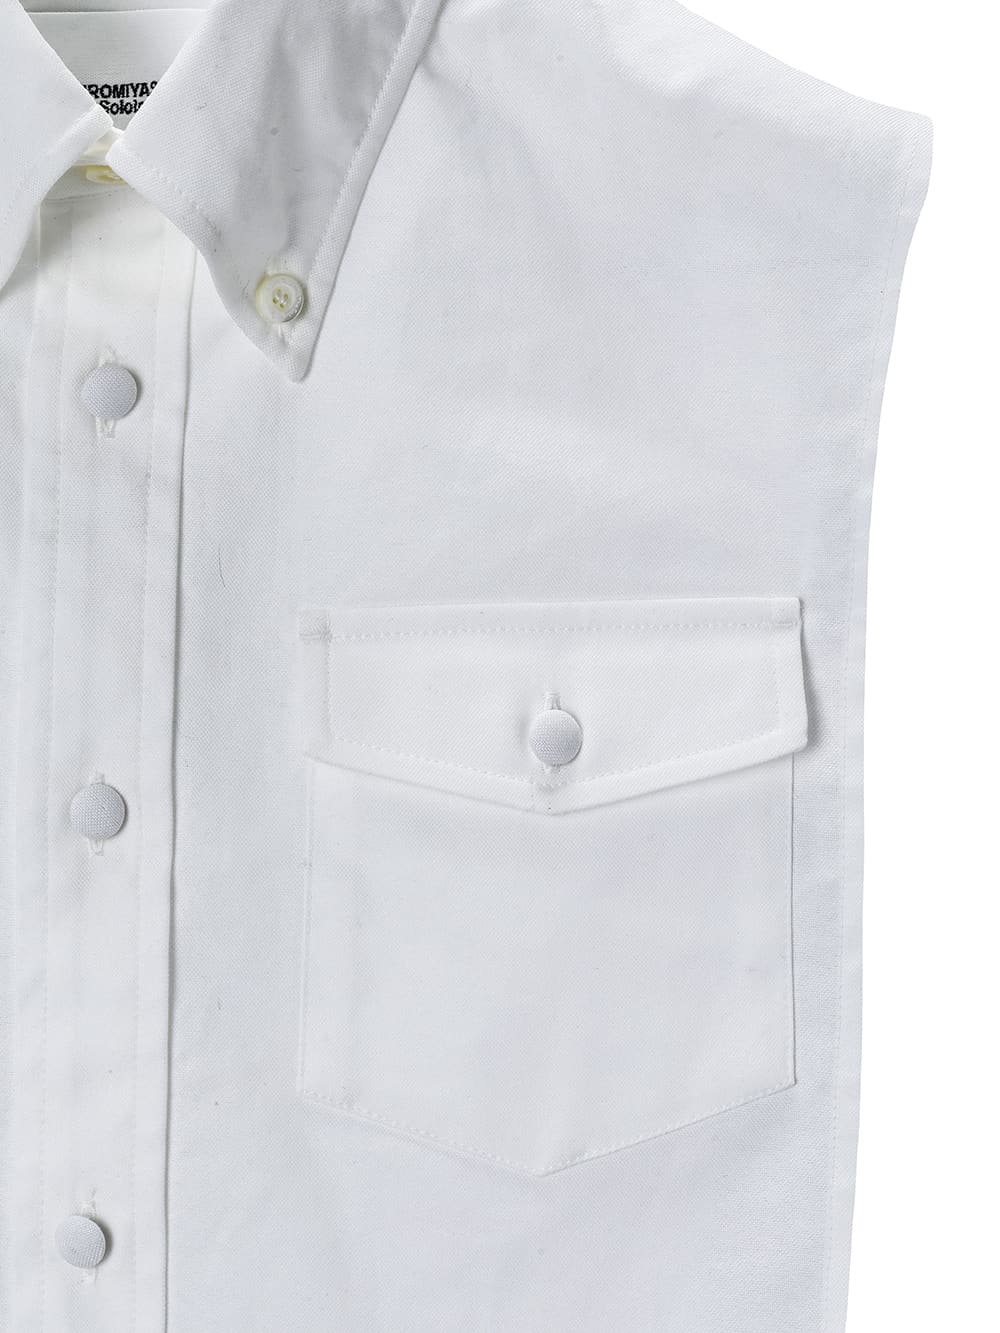 button down collar attachment shirt.